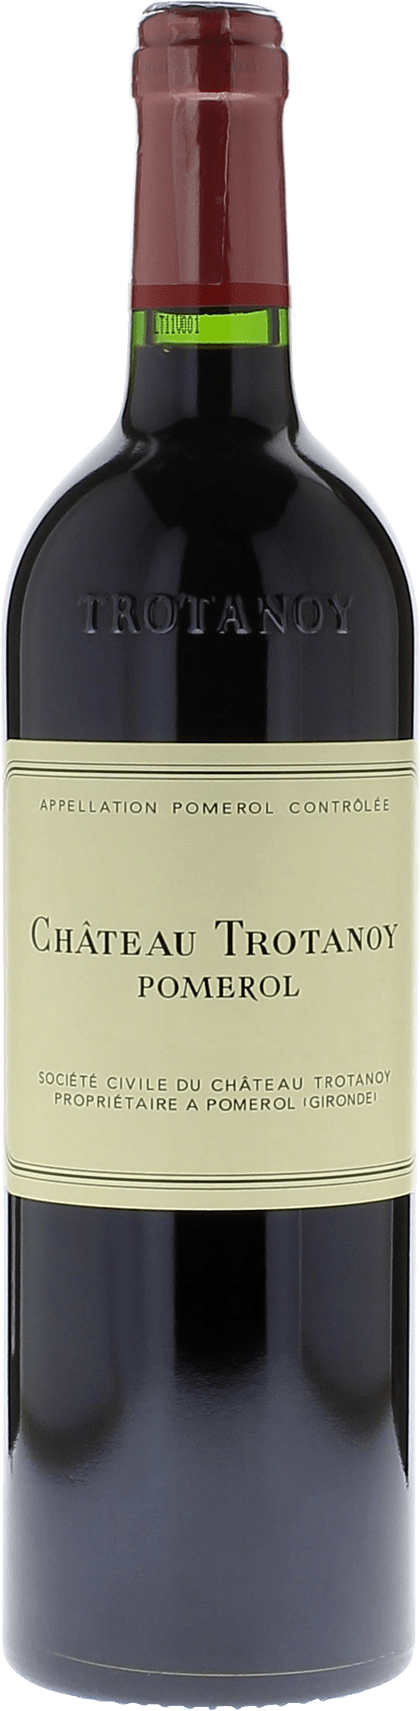 Trotanoy 1997  Pomerol, Bordeaux rouge